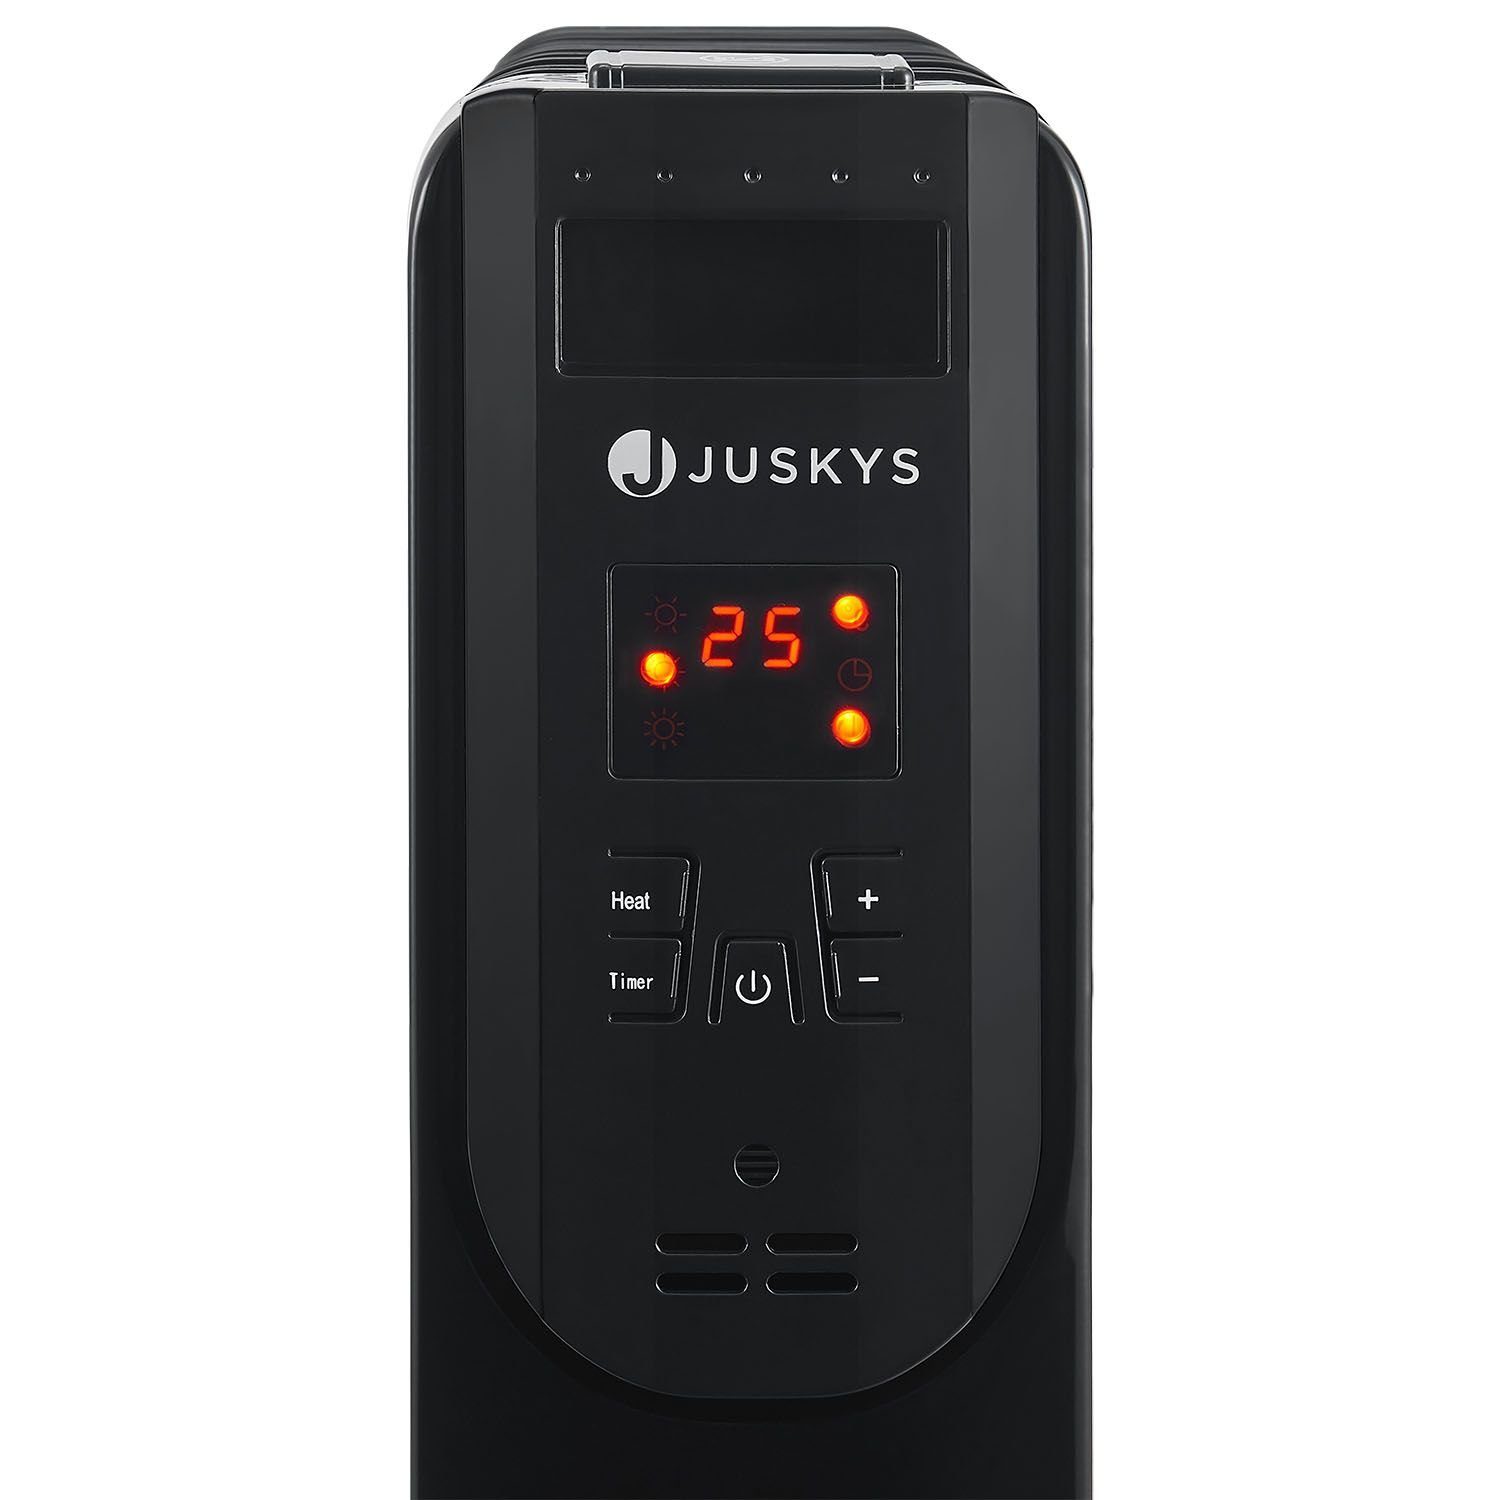 Juskys Ölradiator OH120BL3, Überhitzungsschutz, Rippen, 2000 Kabelhalterung Heizstufen, 9 3 W